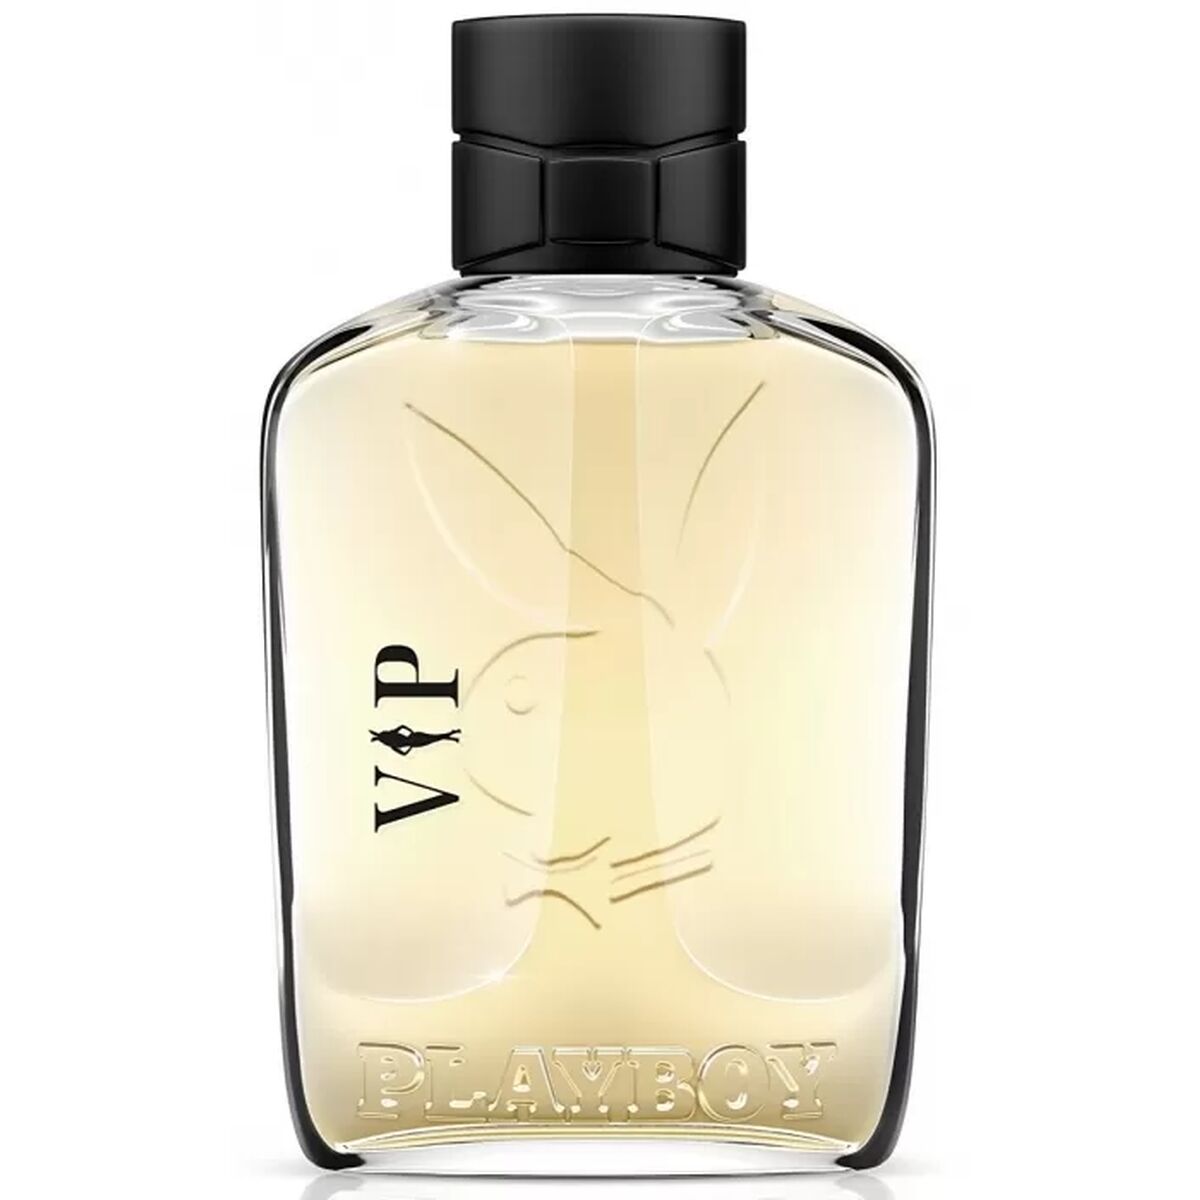 Perfume Hombre Playboy EDT VIP 100 ml